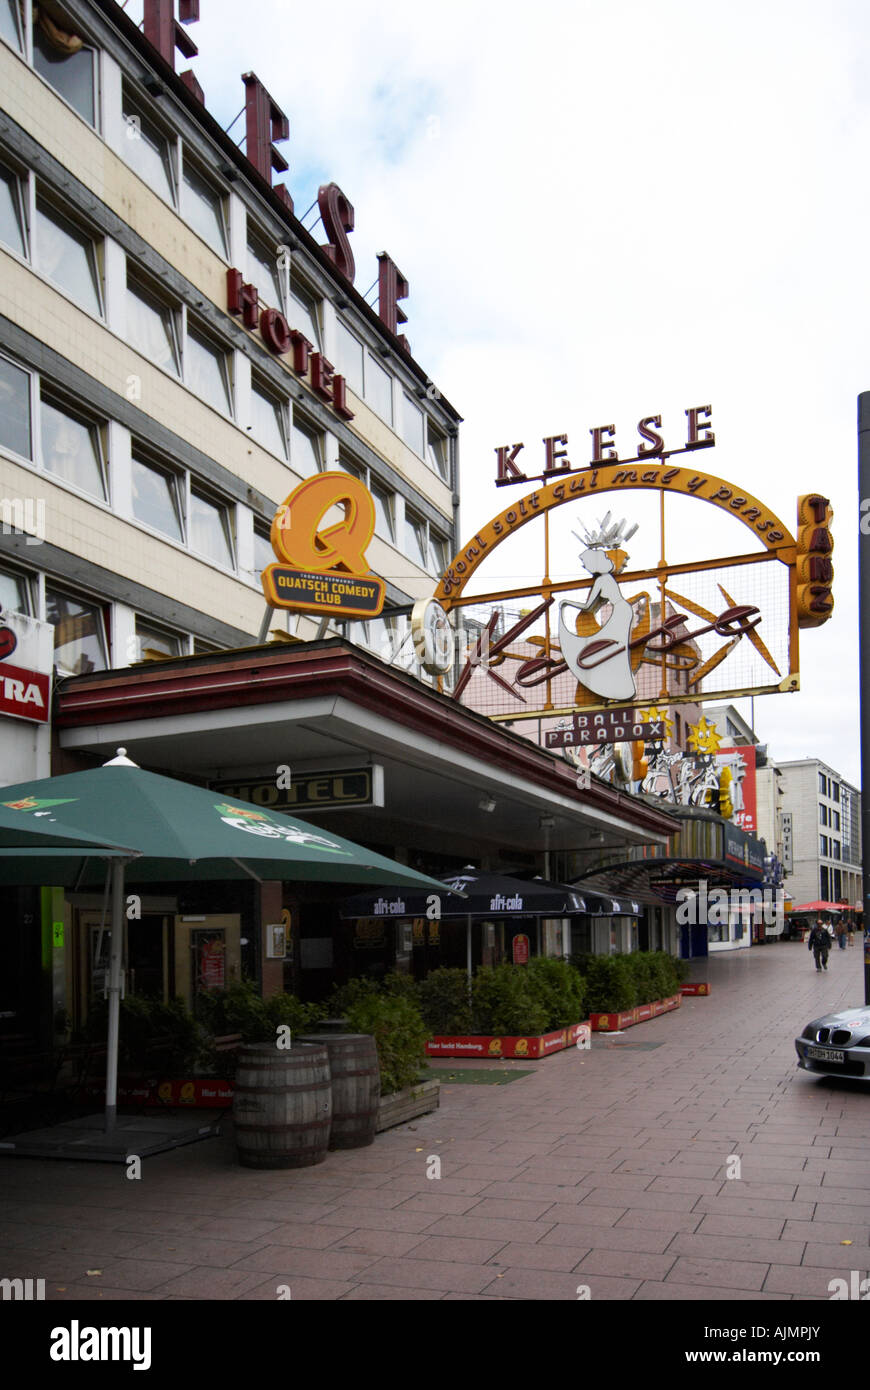 Café Keese. Legendary Dancing Place on Reeperbahn in Hamburg Stock Photo